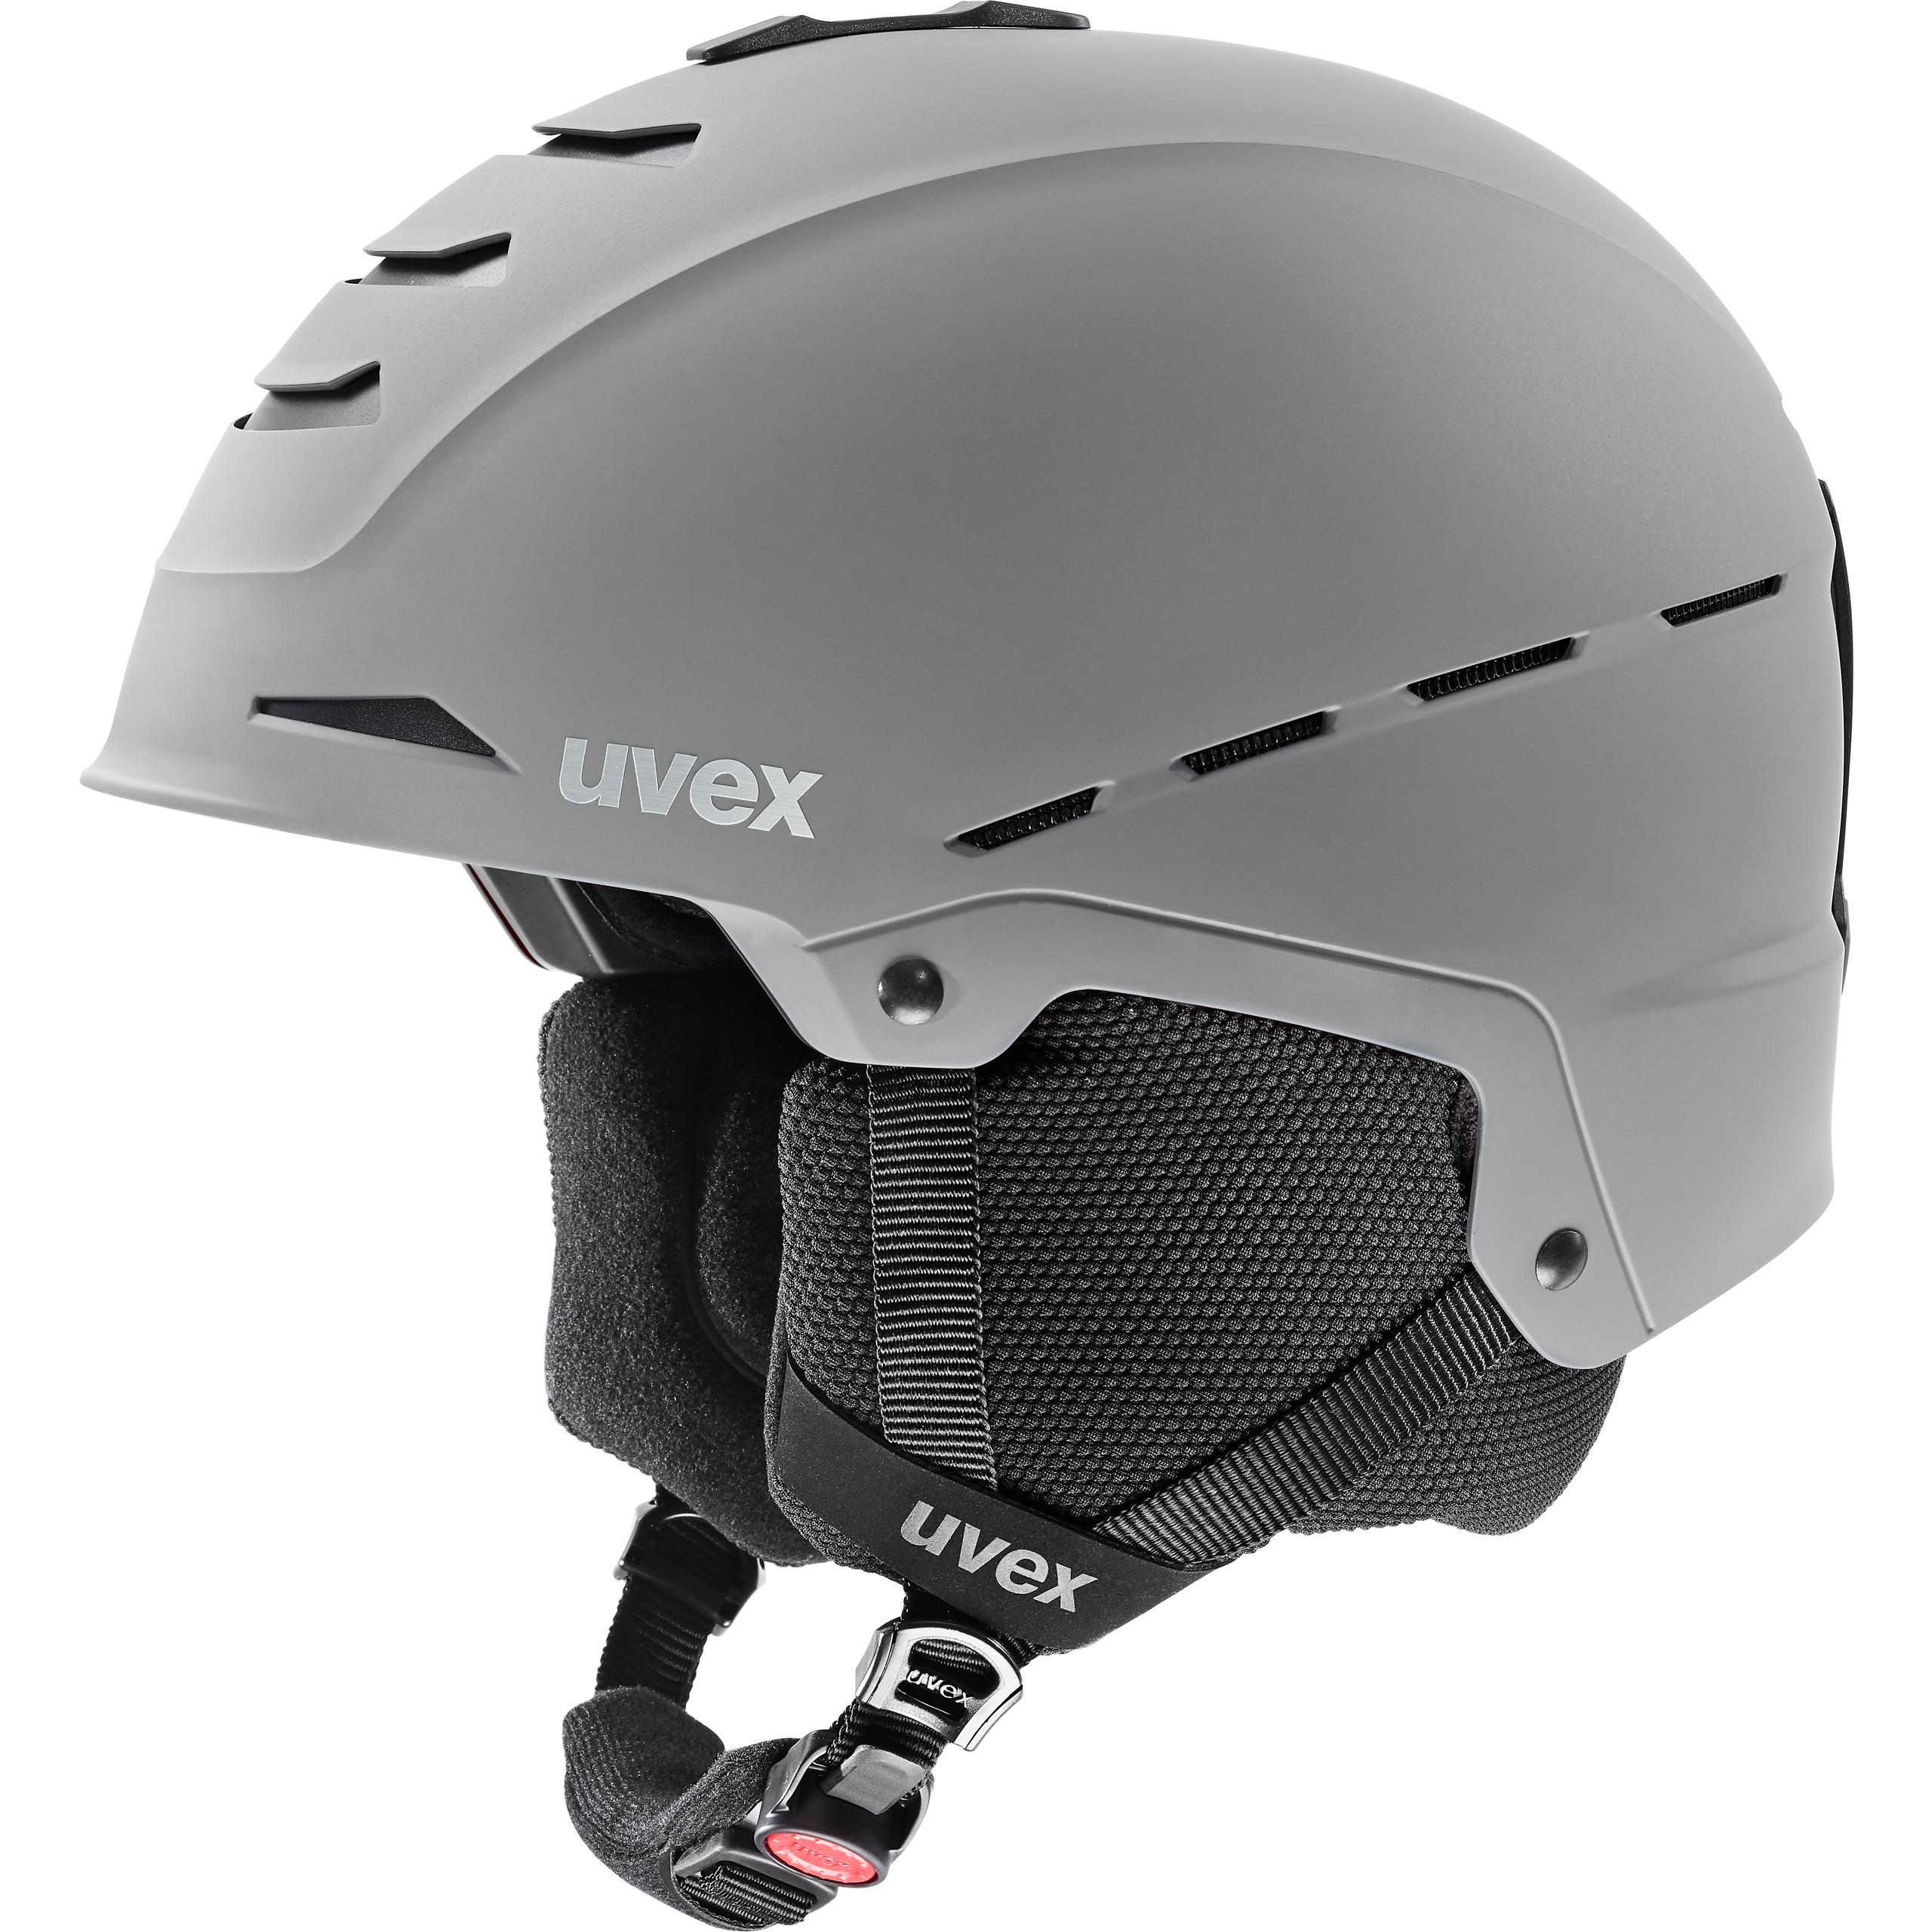 H405 Skihelm Helm Snowboardhelm Uvex 53-58 cm verstellbar 